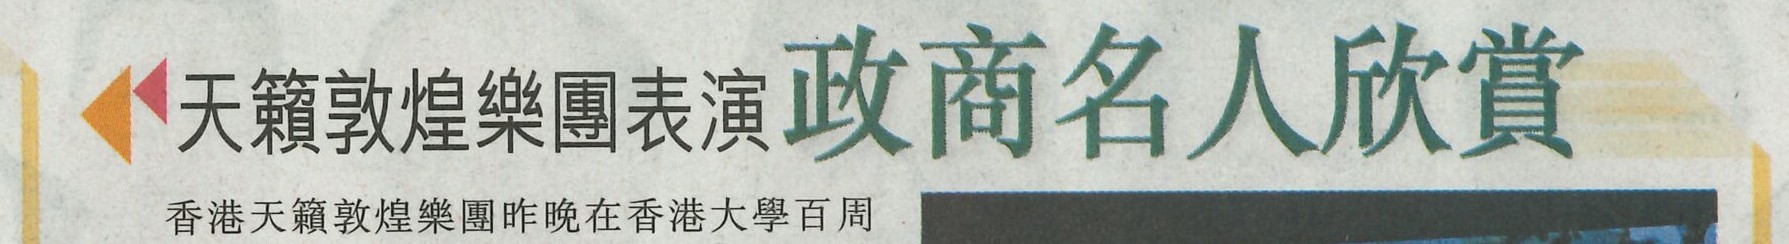 2019-06-08 | Singtao Daily | A12 | 天籟敦煌樂團表演 – 政商名人欣賞